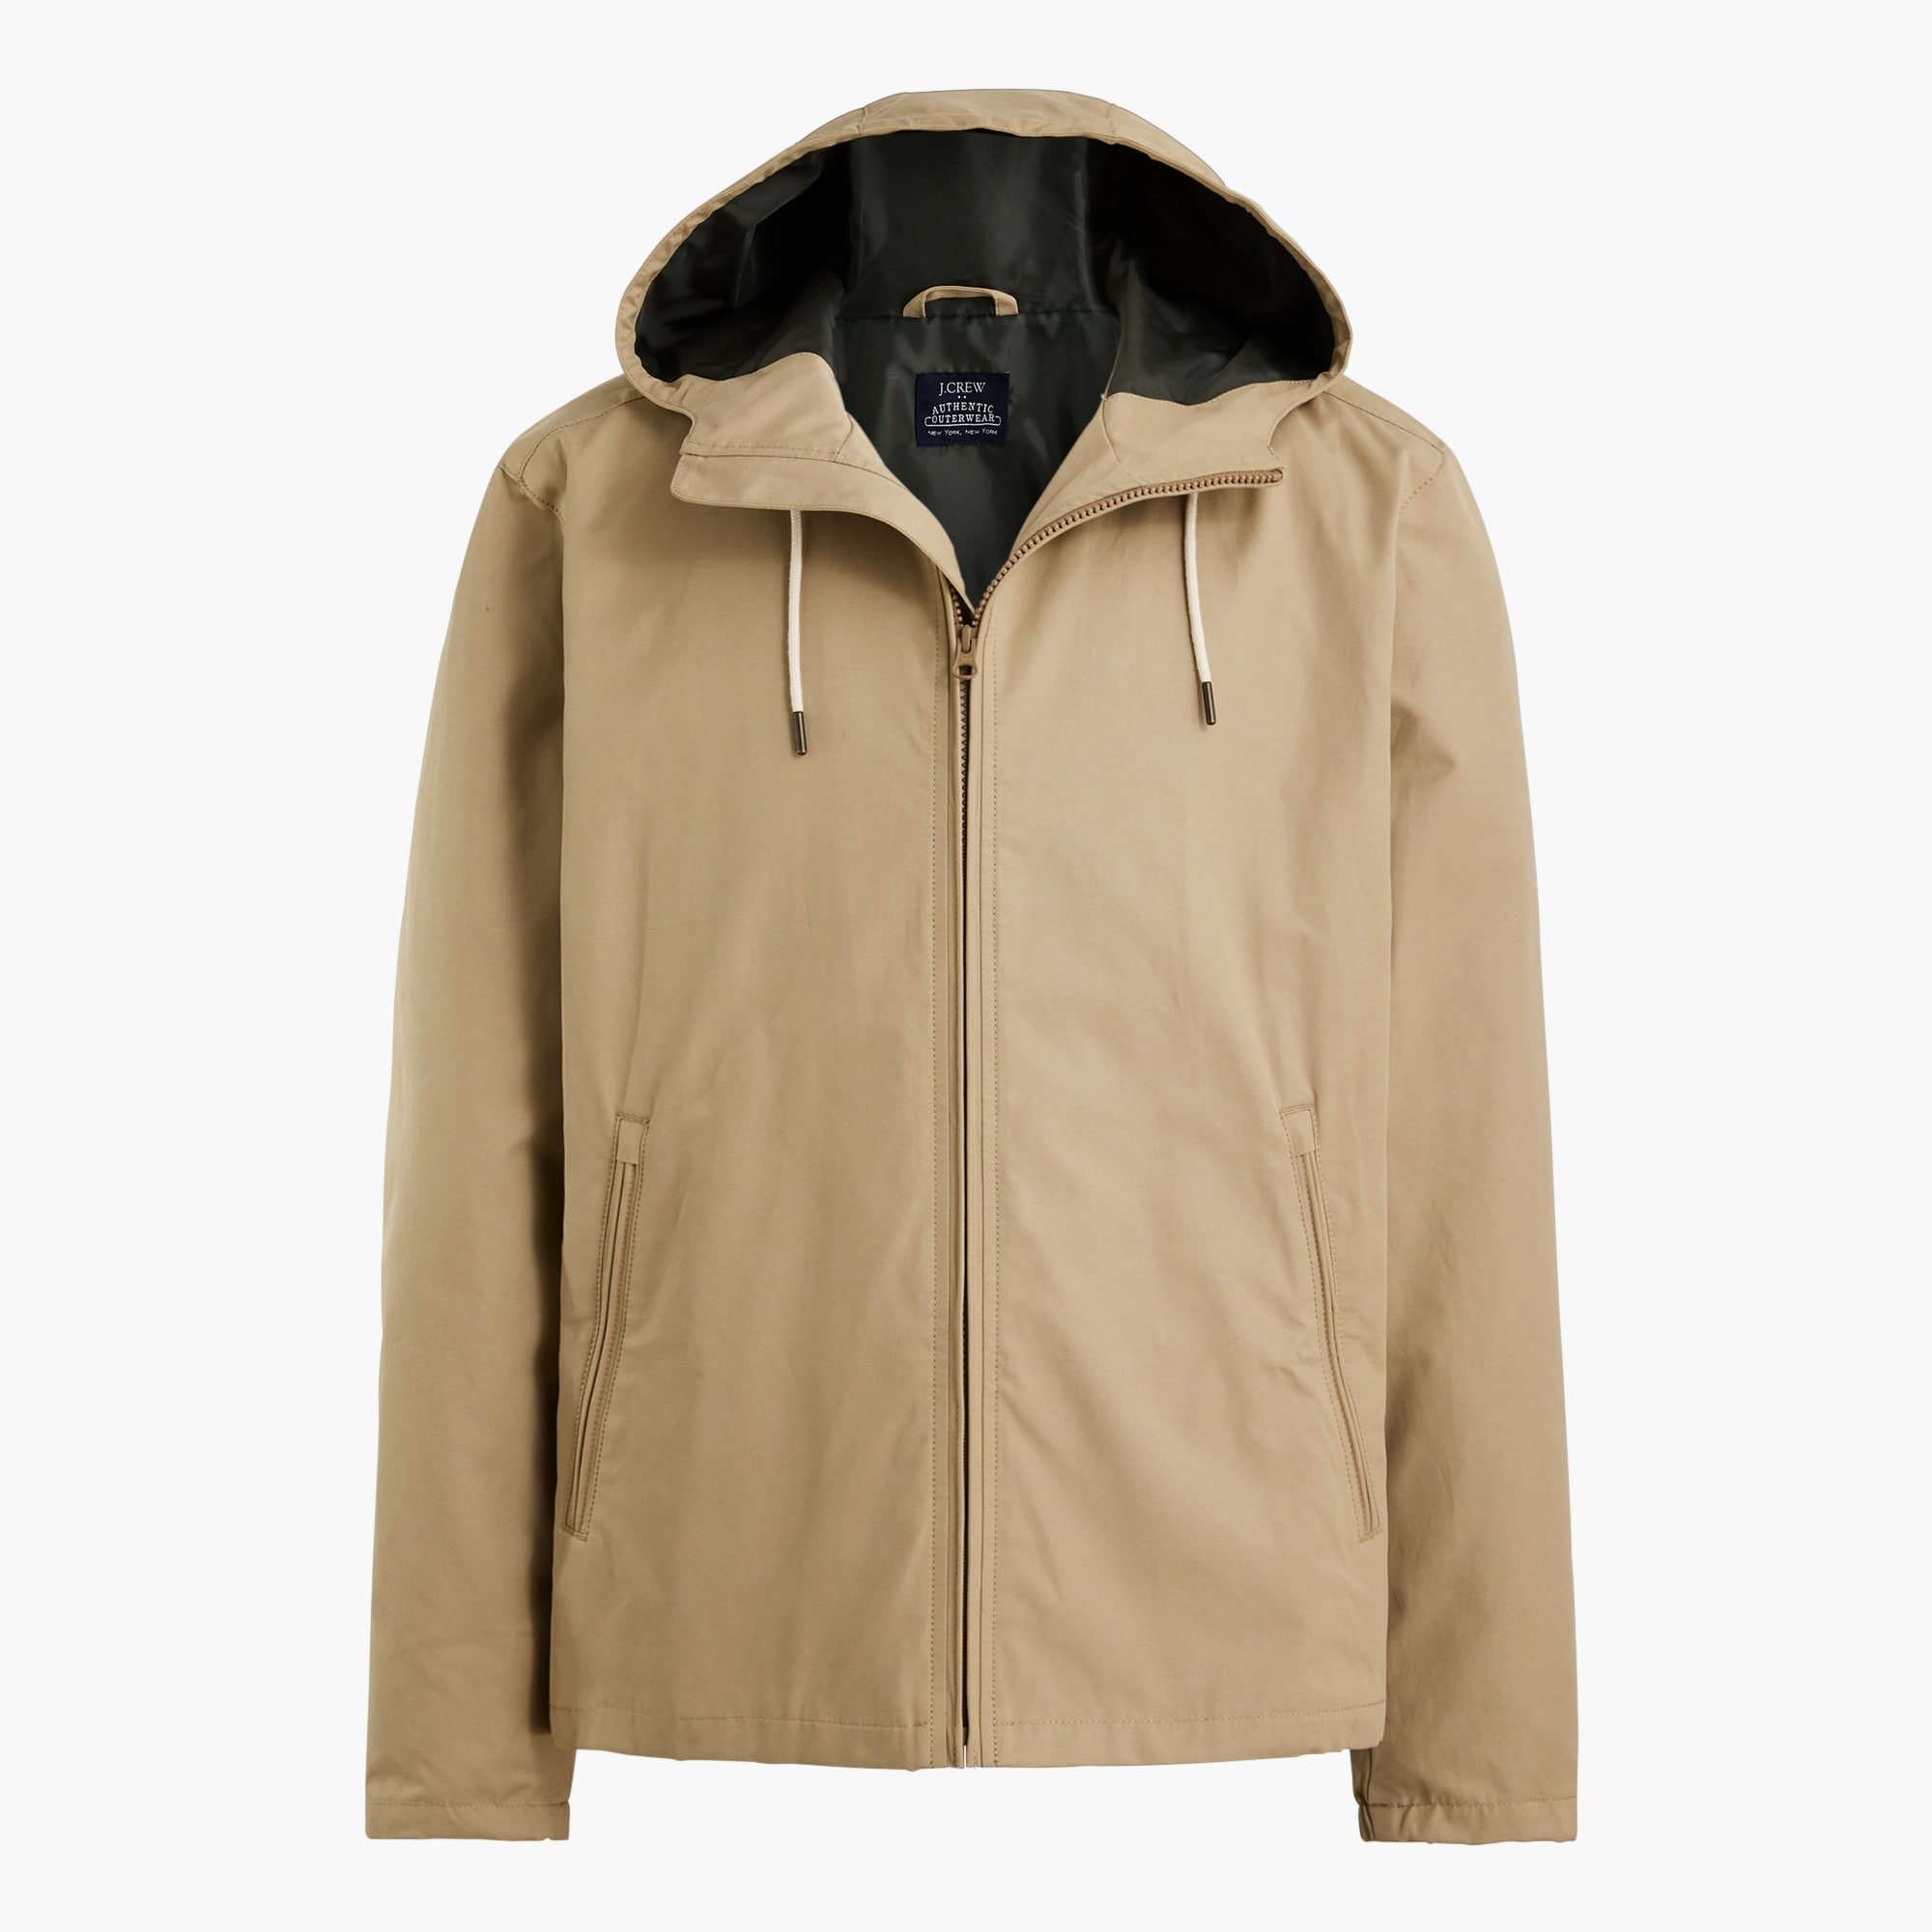 Lightweight hooded jacket